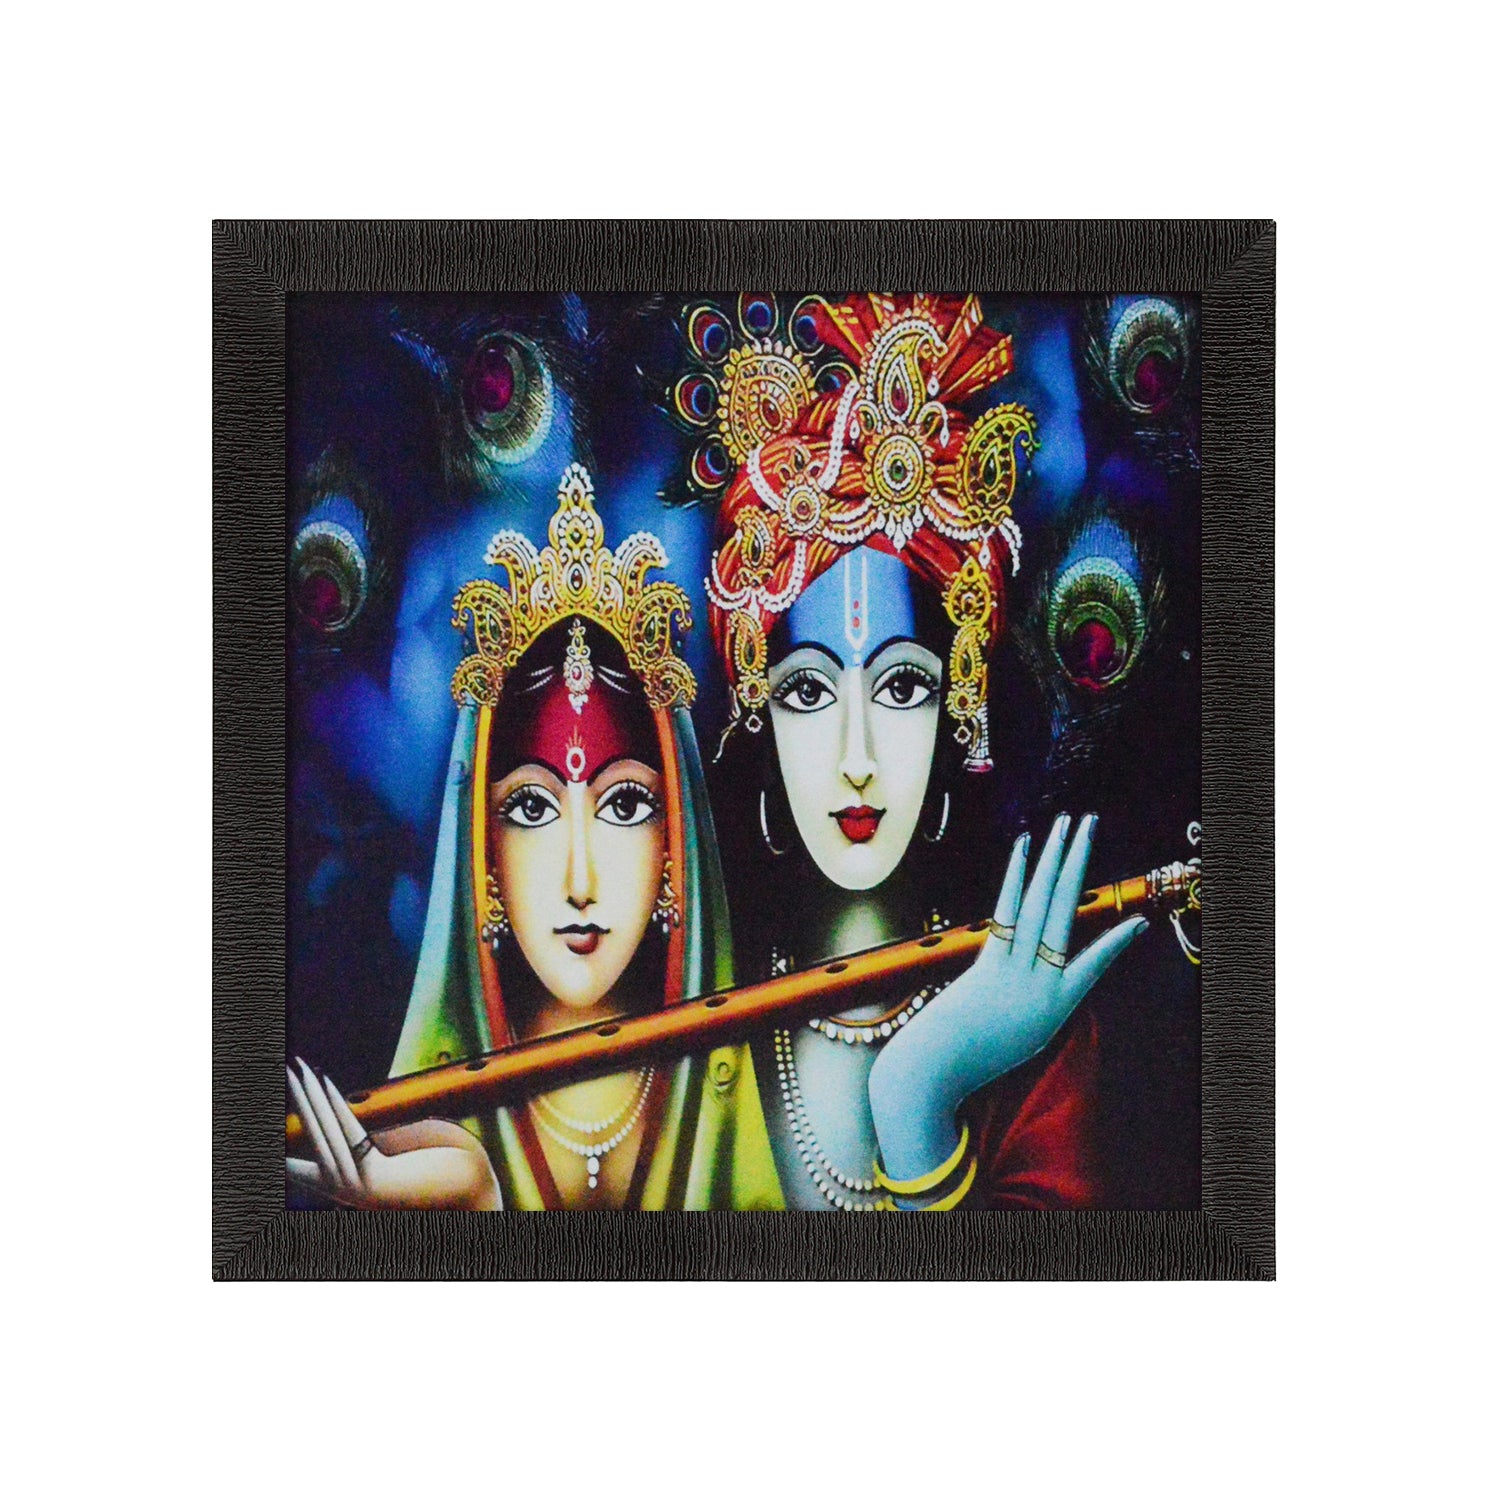 Radha Krishna Holding Flute In Hand Wall Painting Digital Printed Religious Art